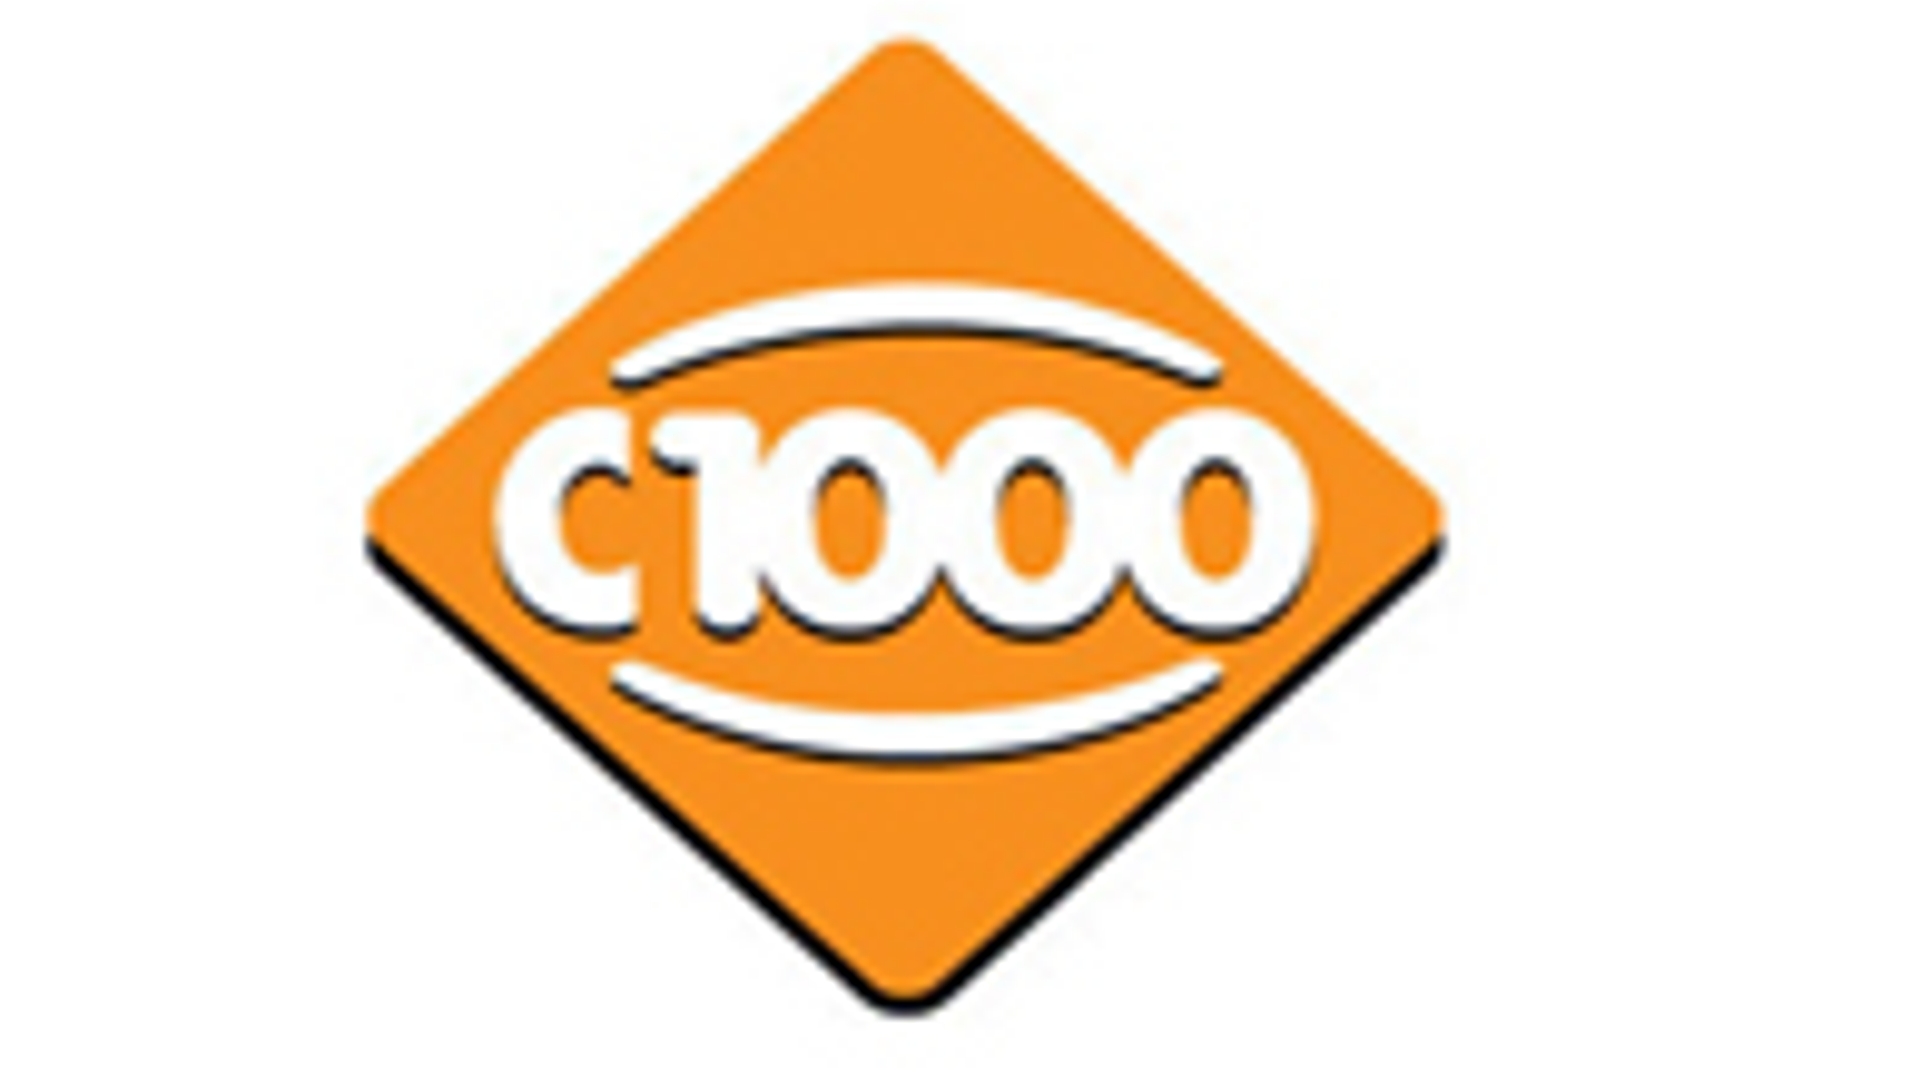 c1000.jpg